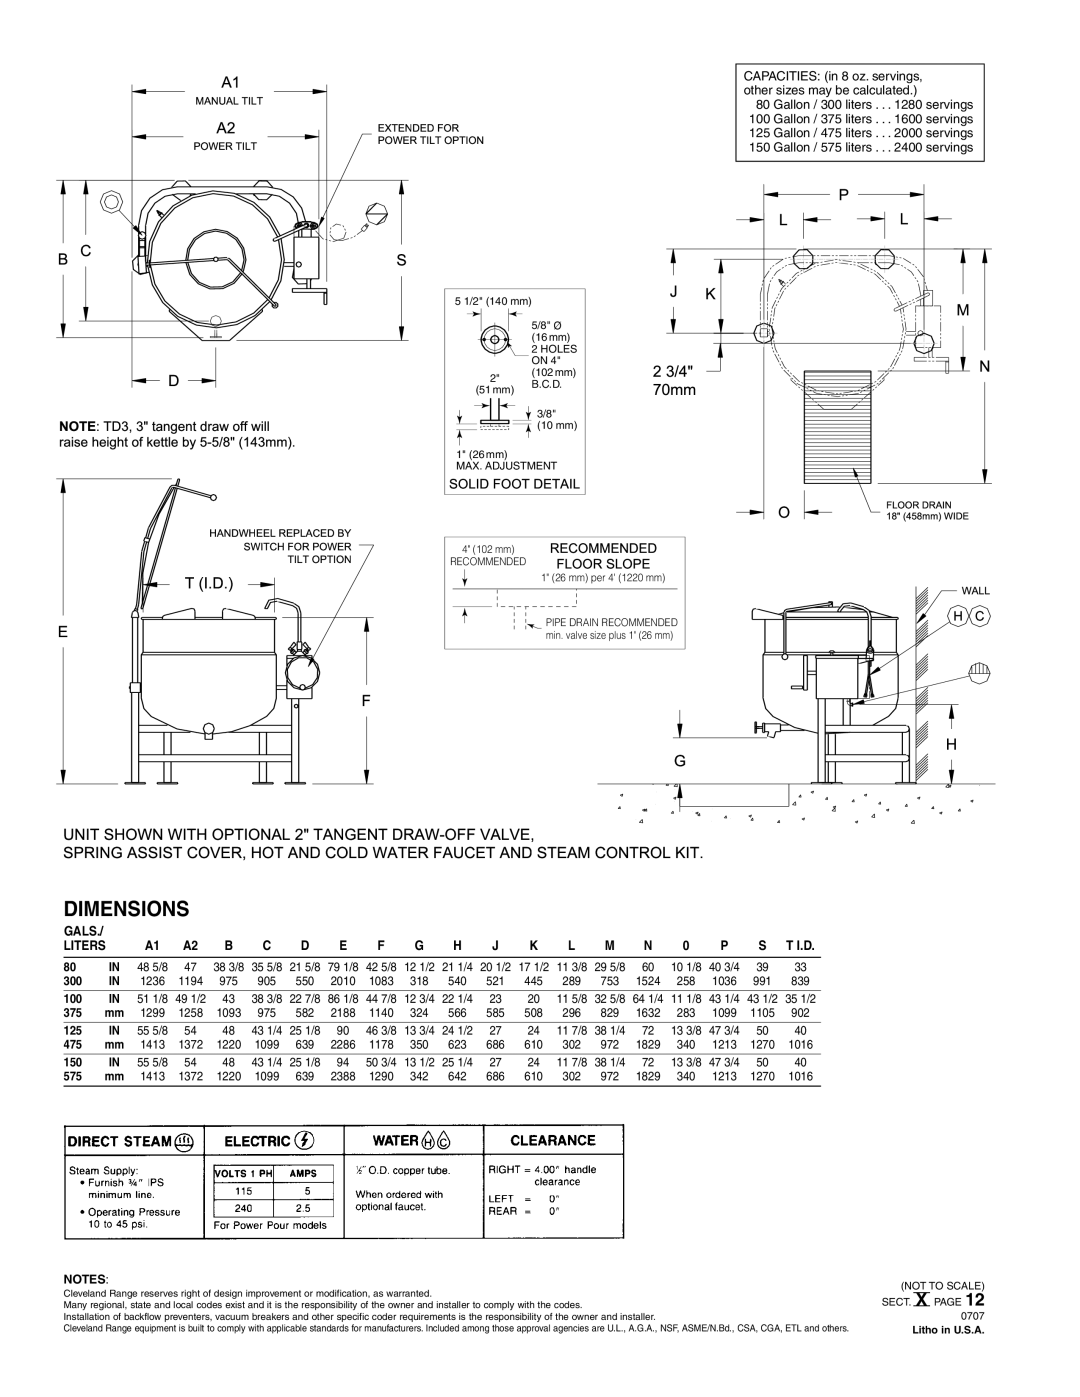 Cleveland Range KDL-100-T, KDL-80-T, KDL-150-T, KDL-125-T specifications Dimensions 